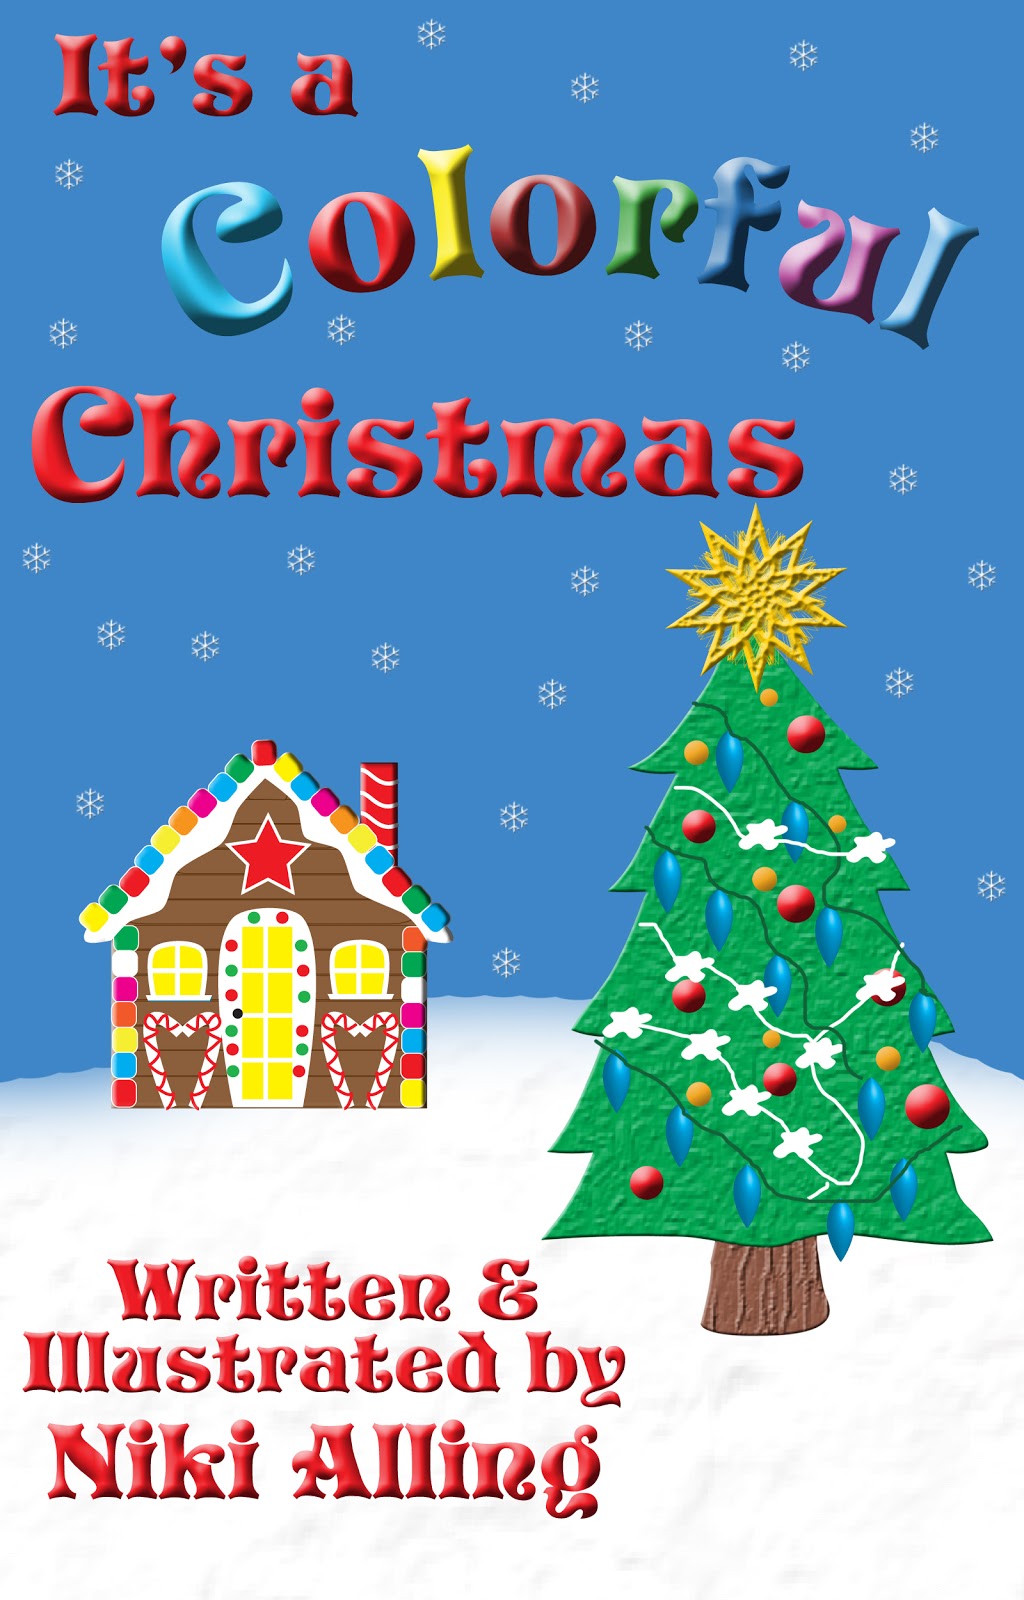 http://www.amazon.com/Colorful-Christmas-Concept-Books-Children-ebook/dp/B009MOQUWC/ref=la_B005O3KMI8_1_3?s=books&ie=UTF8&qid=1386964737&sr=1-3